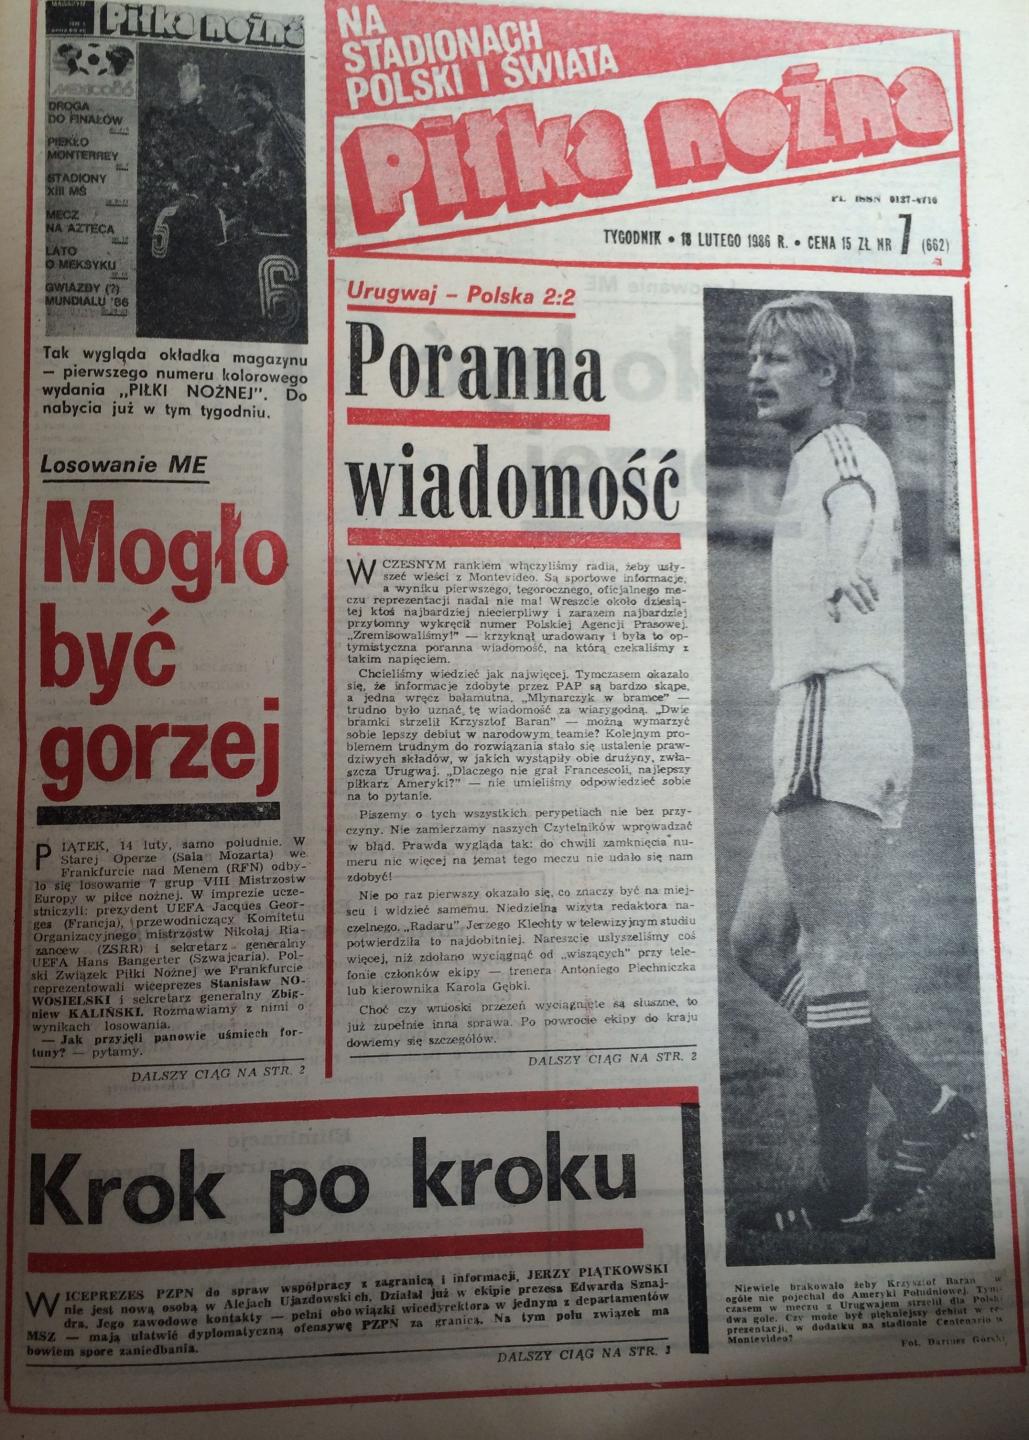 Piłka Nożna po Urugwaj - Polska 2:2 (16.02.1986) 1